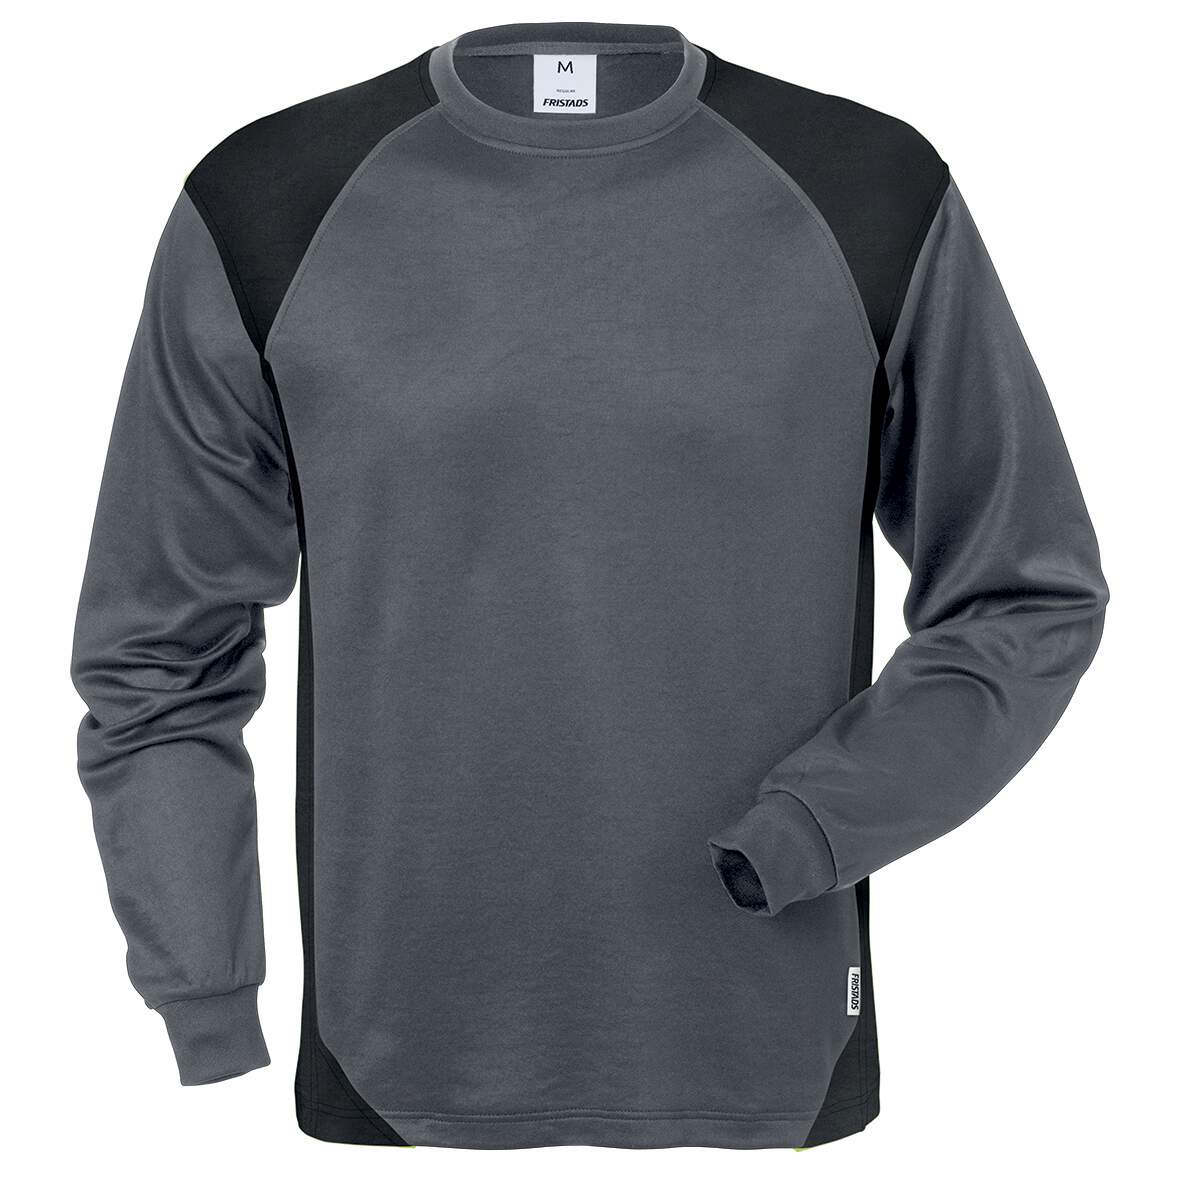 1254395 - T-Shirt grau/schwarz Gr.XS FUSION 7071